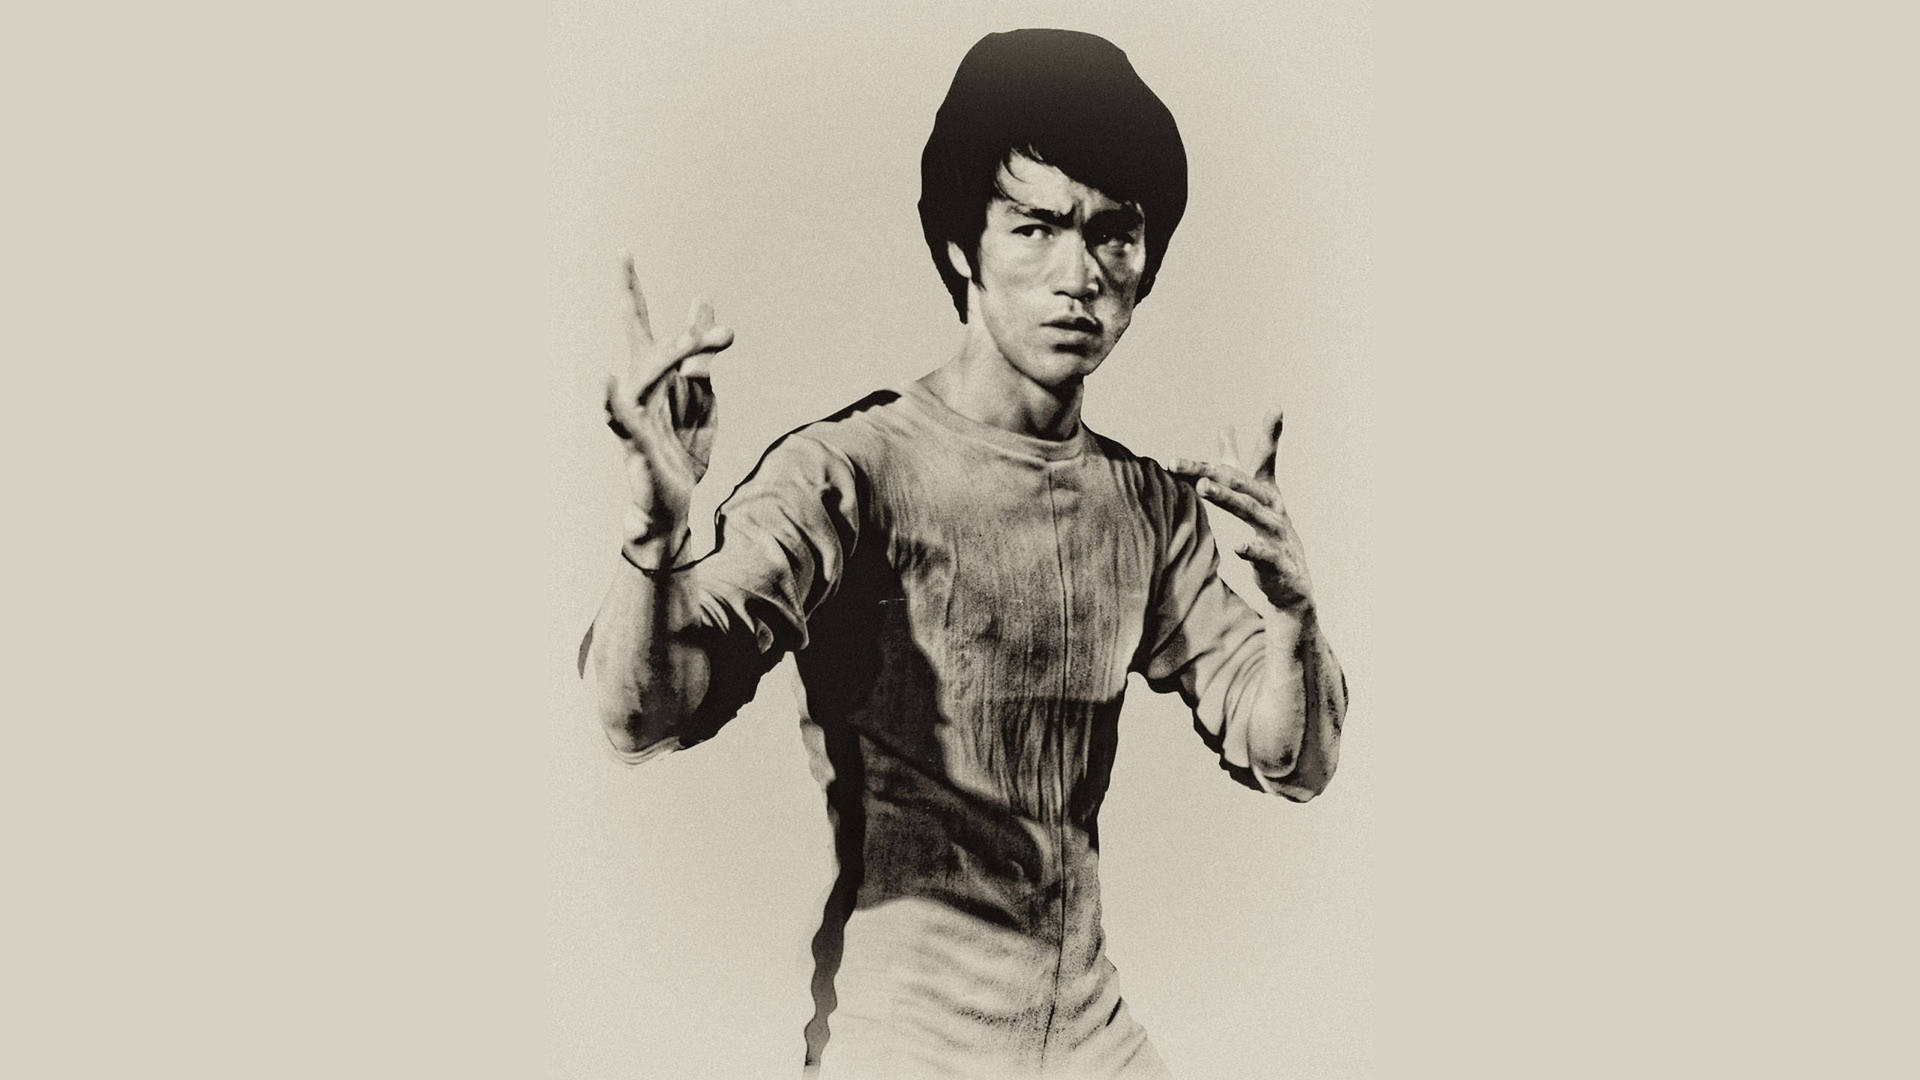 Bruce Lee - “The Dragon” Wallpaper